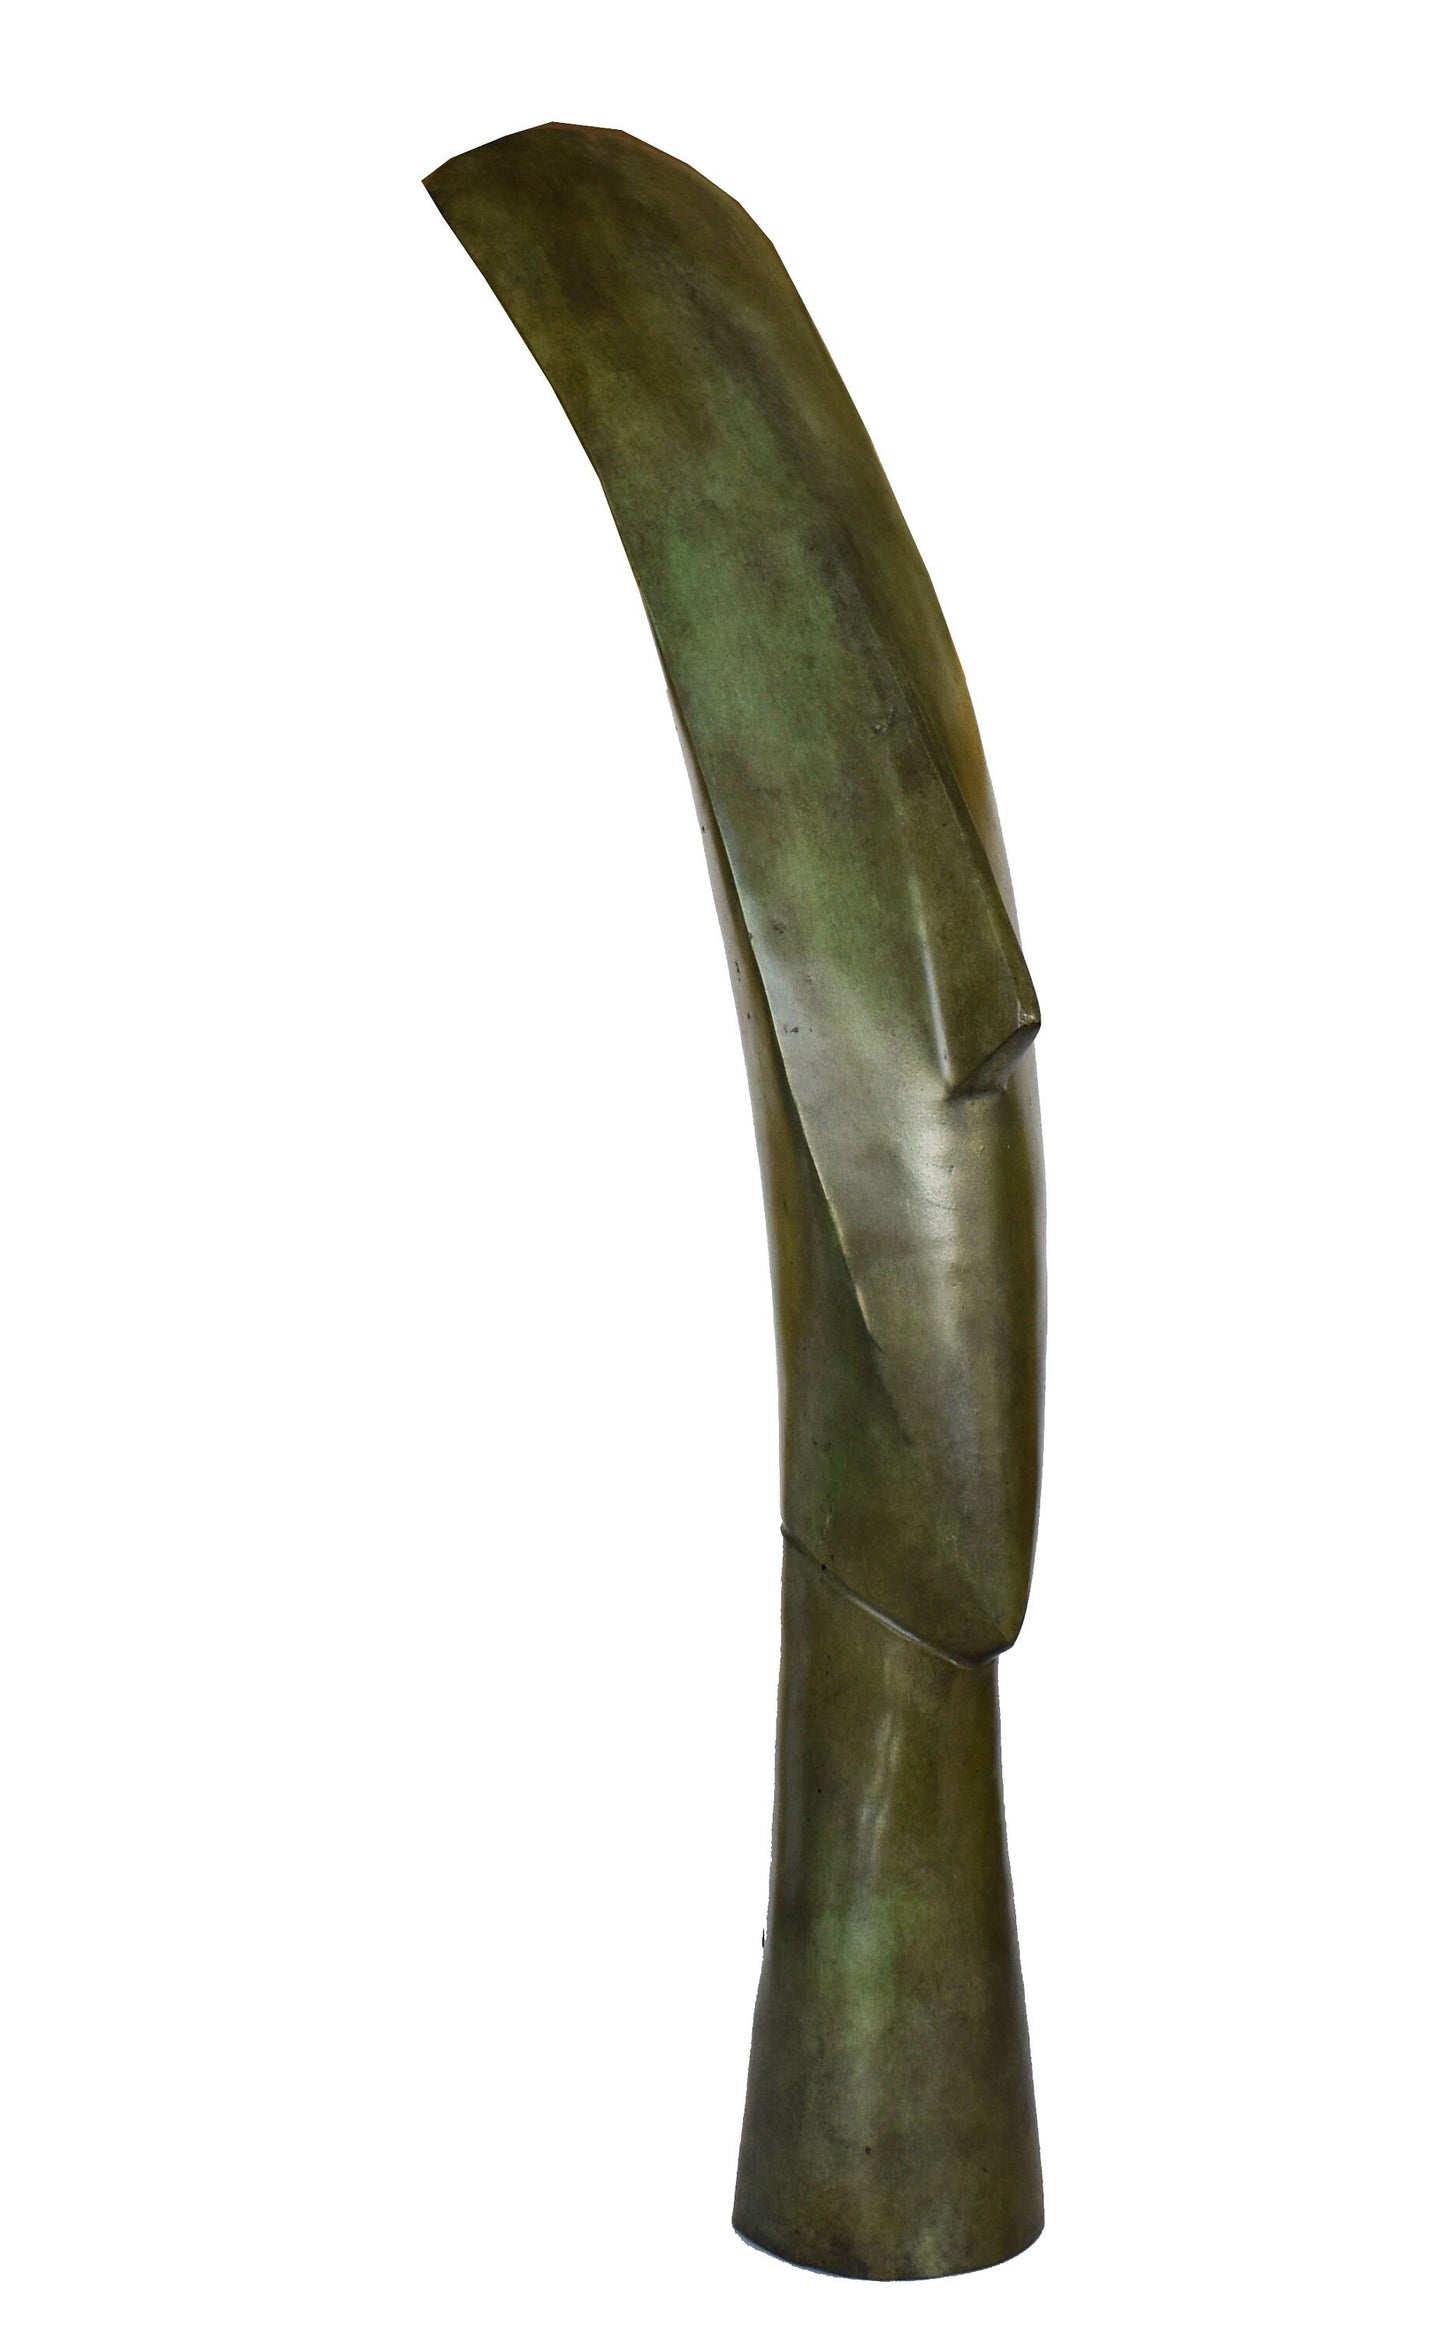 Cycladic Figurine from Keros Island - Ancient Greece - Museum Replica  - Pure Bronze Sculpture